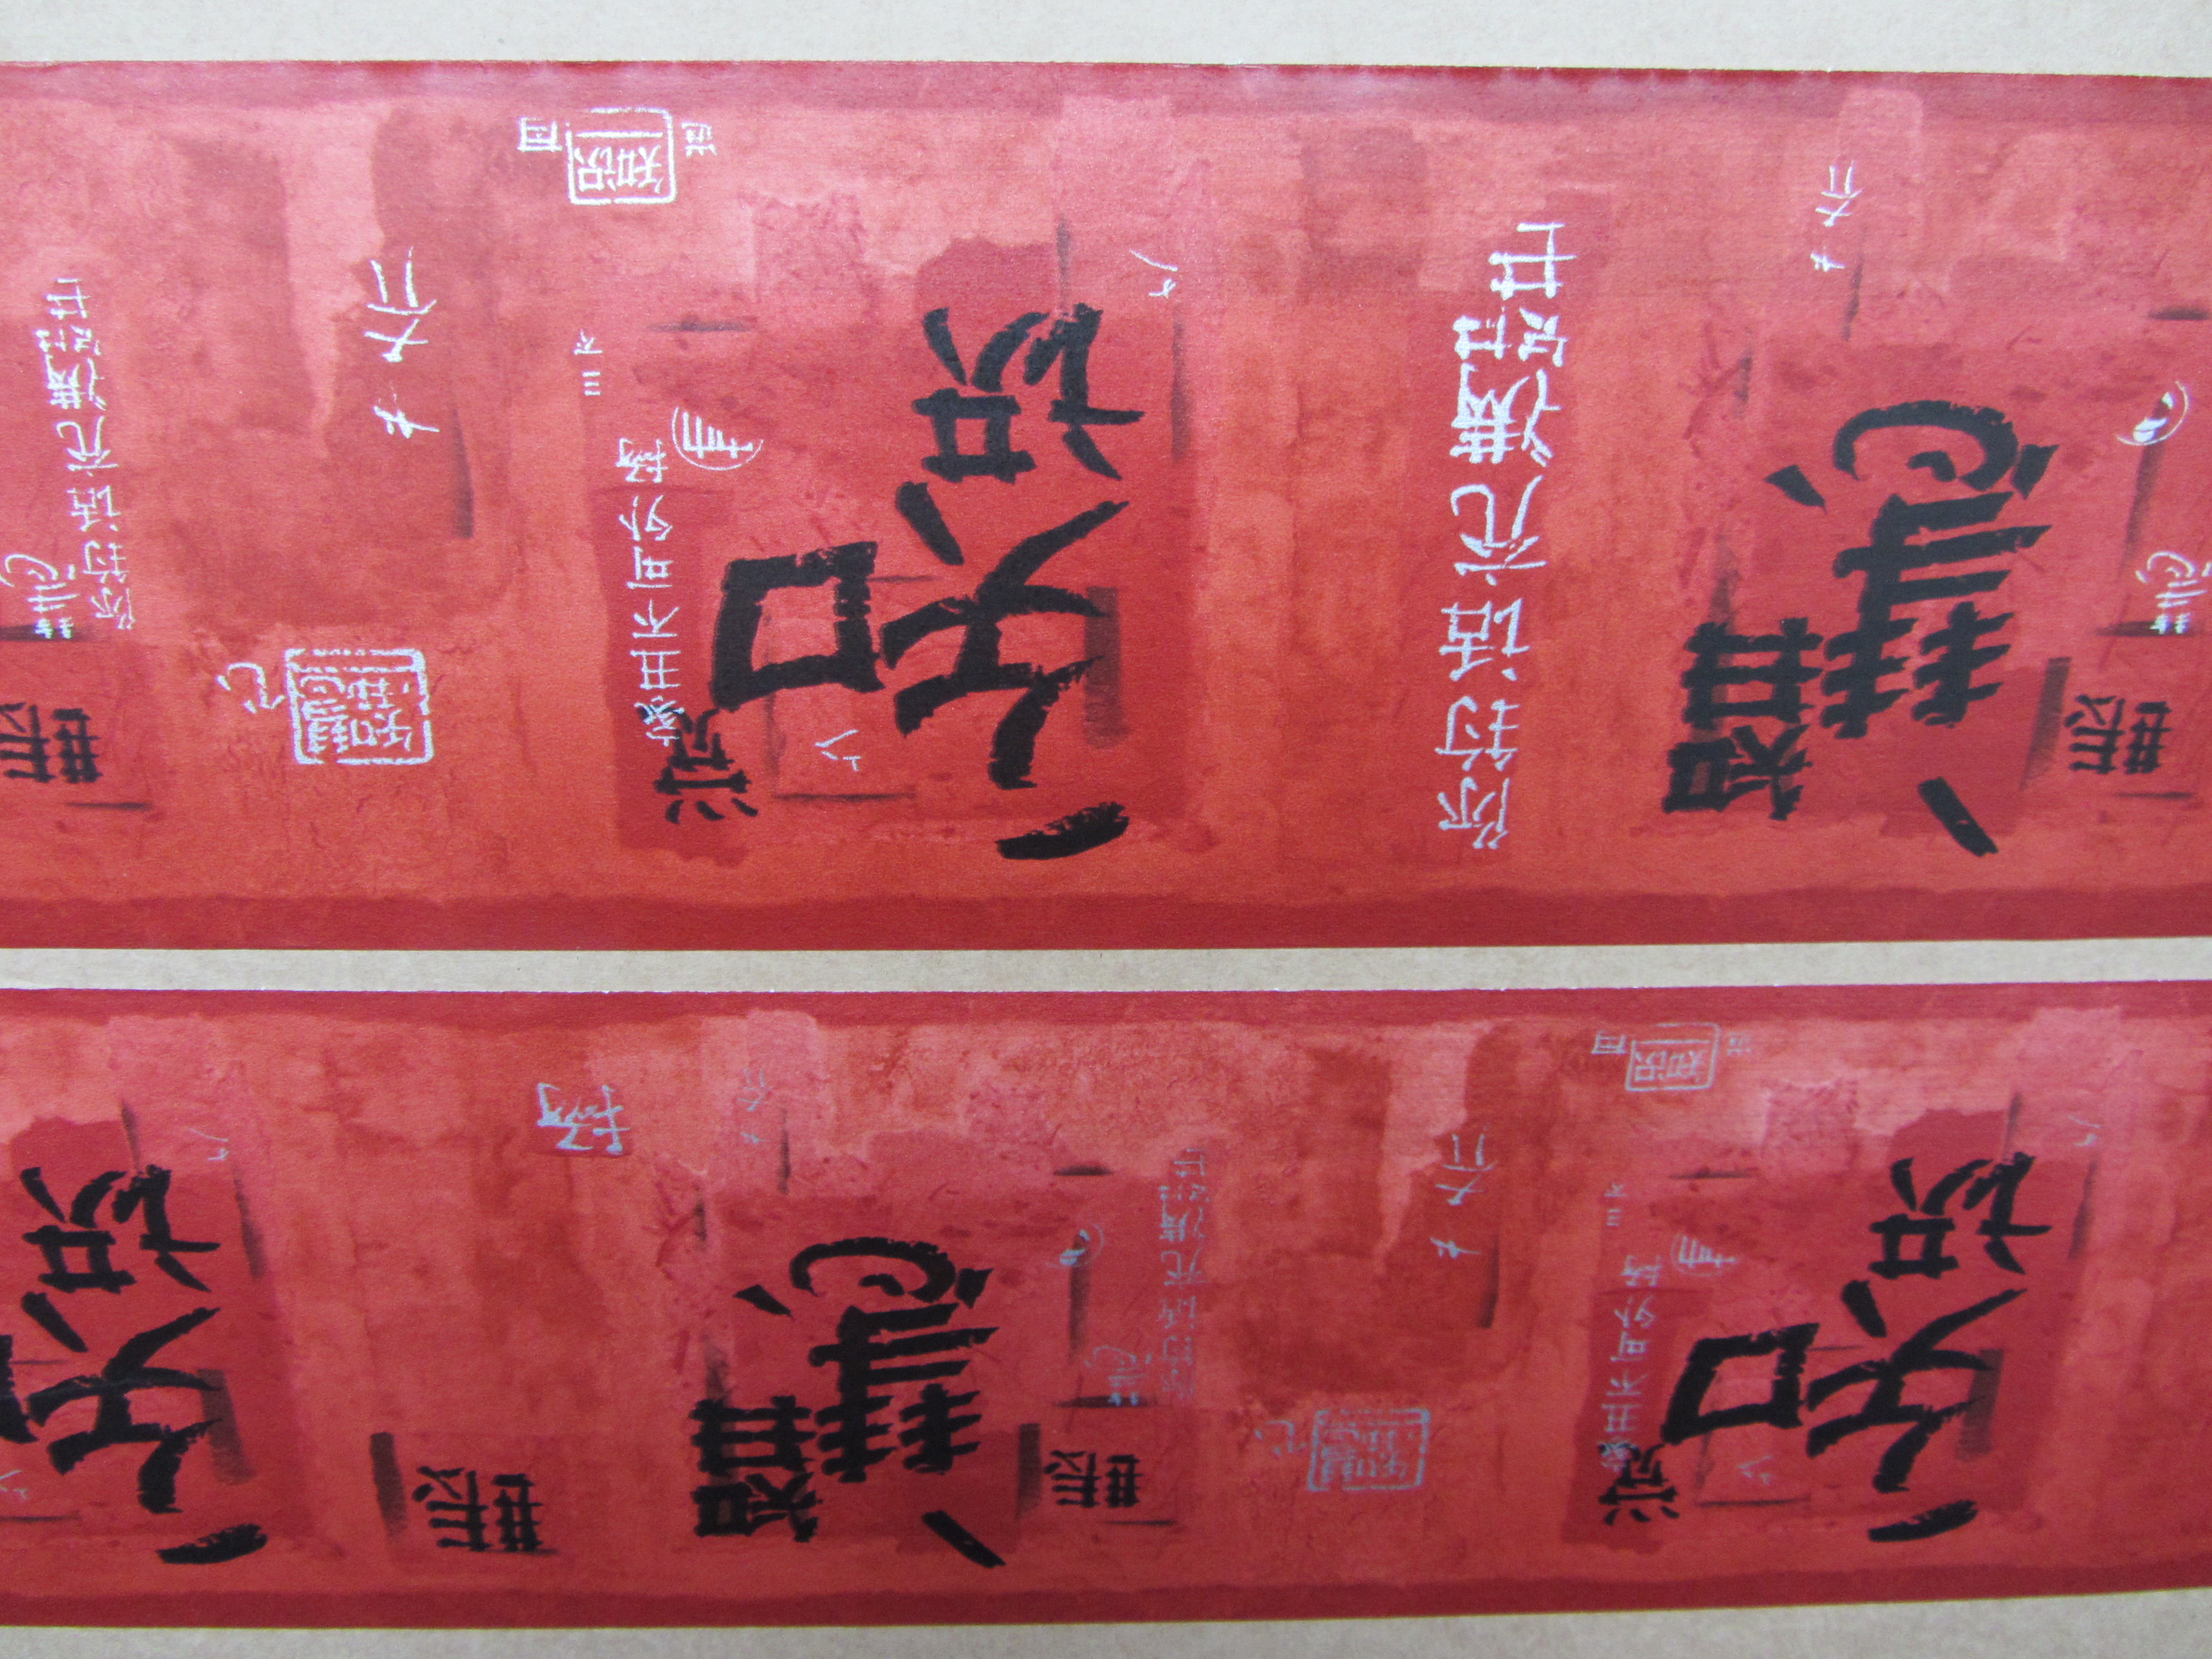  ORIENTAL RED WALLPAPER BORDER SELF ADHESIVE CHINESE DESIGN EDGING NEW 4000x3000